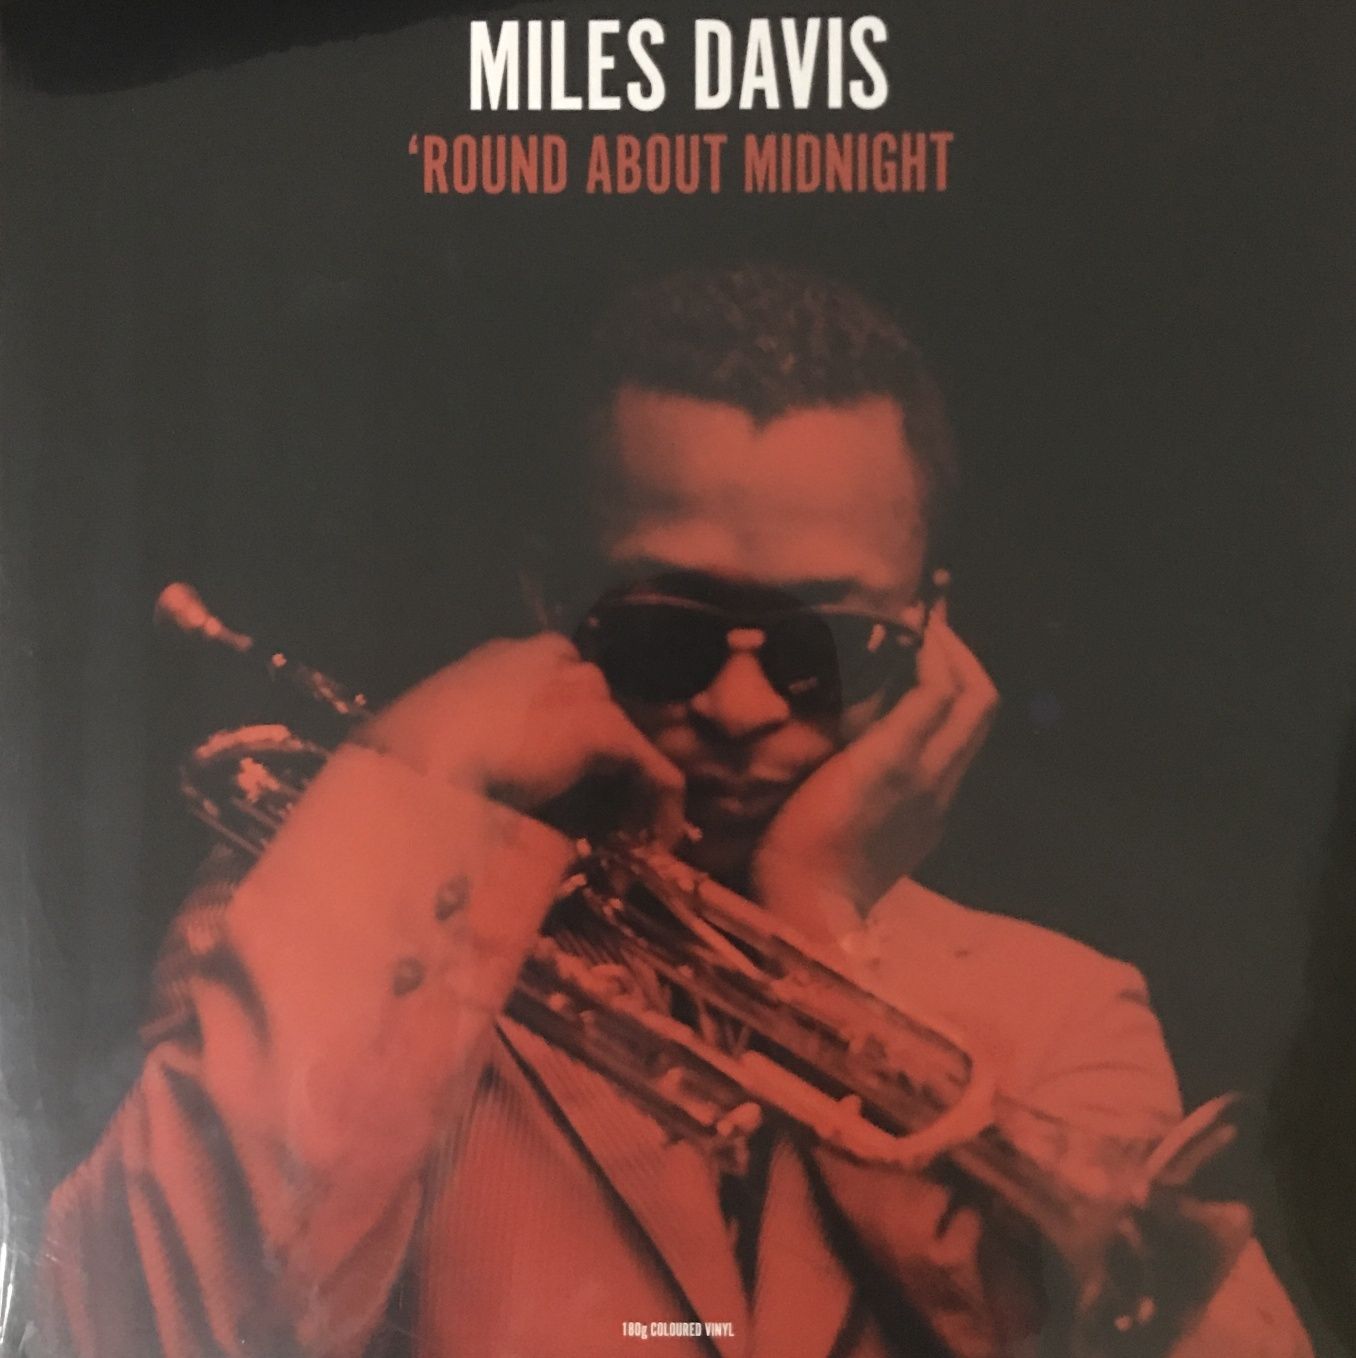 Винил Miles Davis - “‘Round About Midnight”, 180g Coloured Vinyl